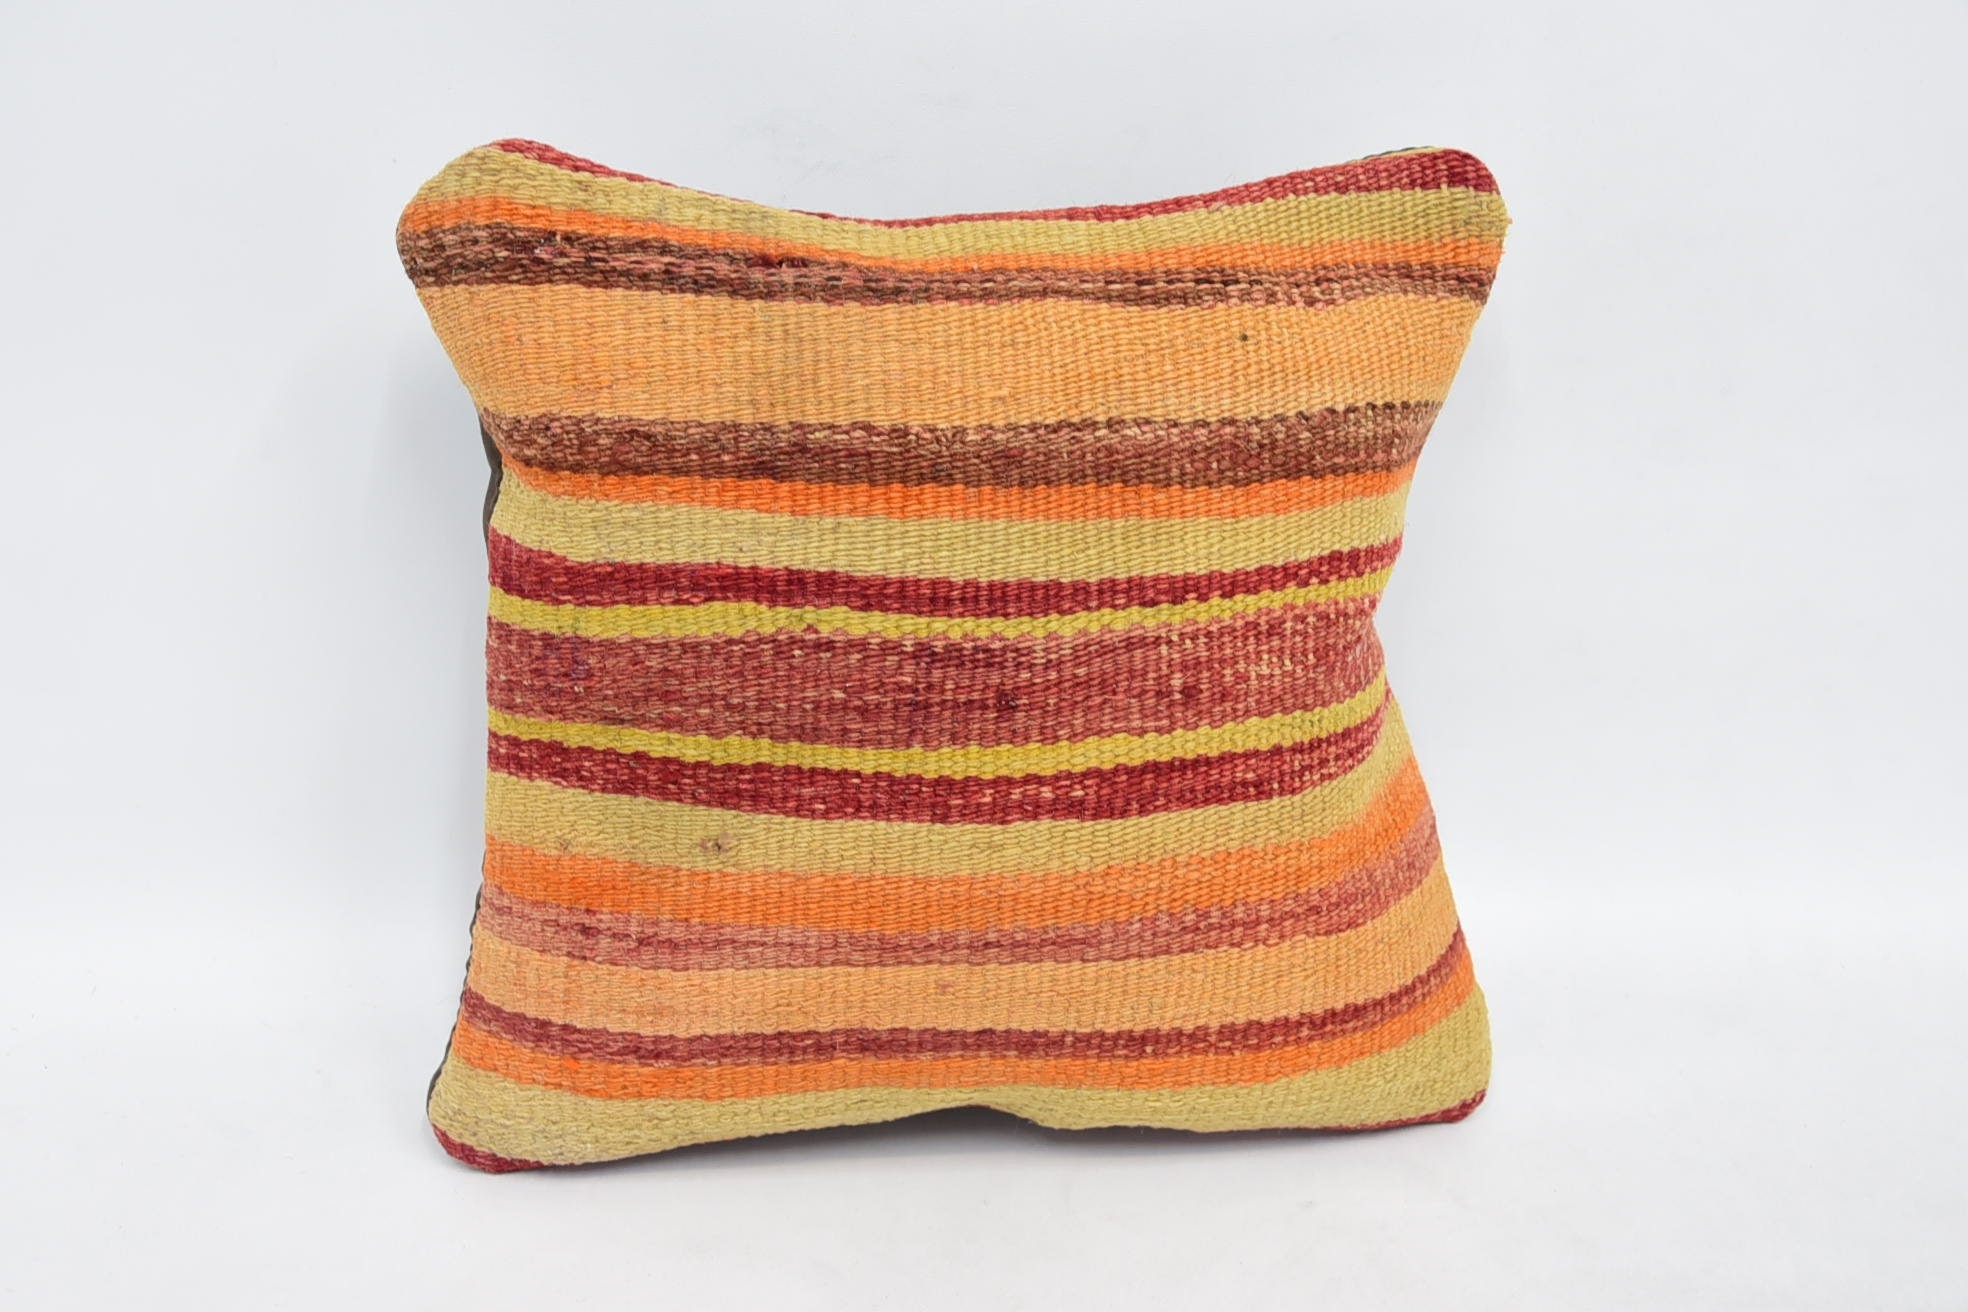 Vintage Pillow, Anatolian Cushion, Cotton Pillow Cover, Boho Pillow, Handwoven Pillow Case, Pillow for Sofa, 12"x12" Orange Cushion Cover